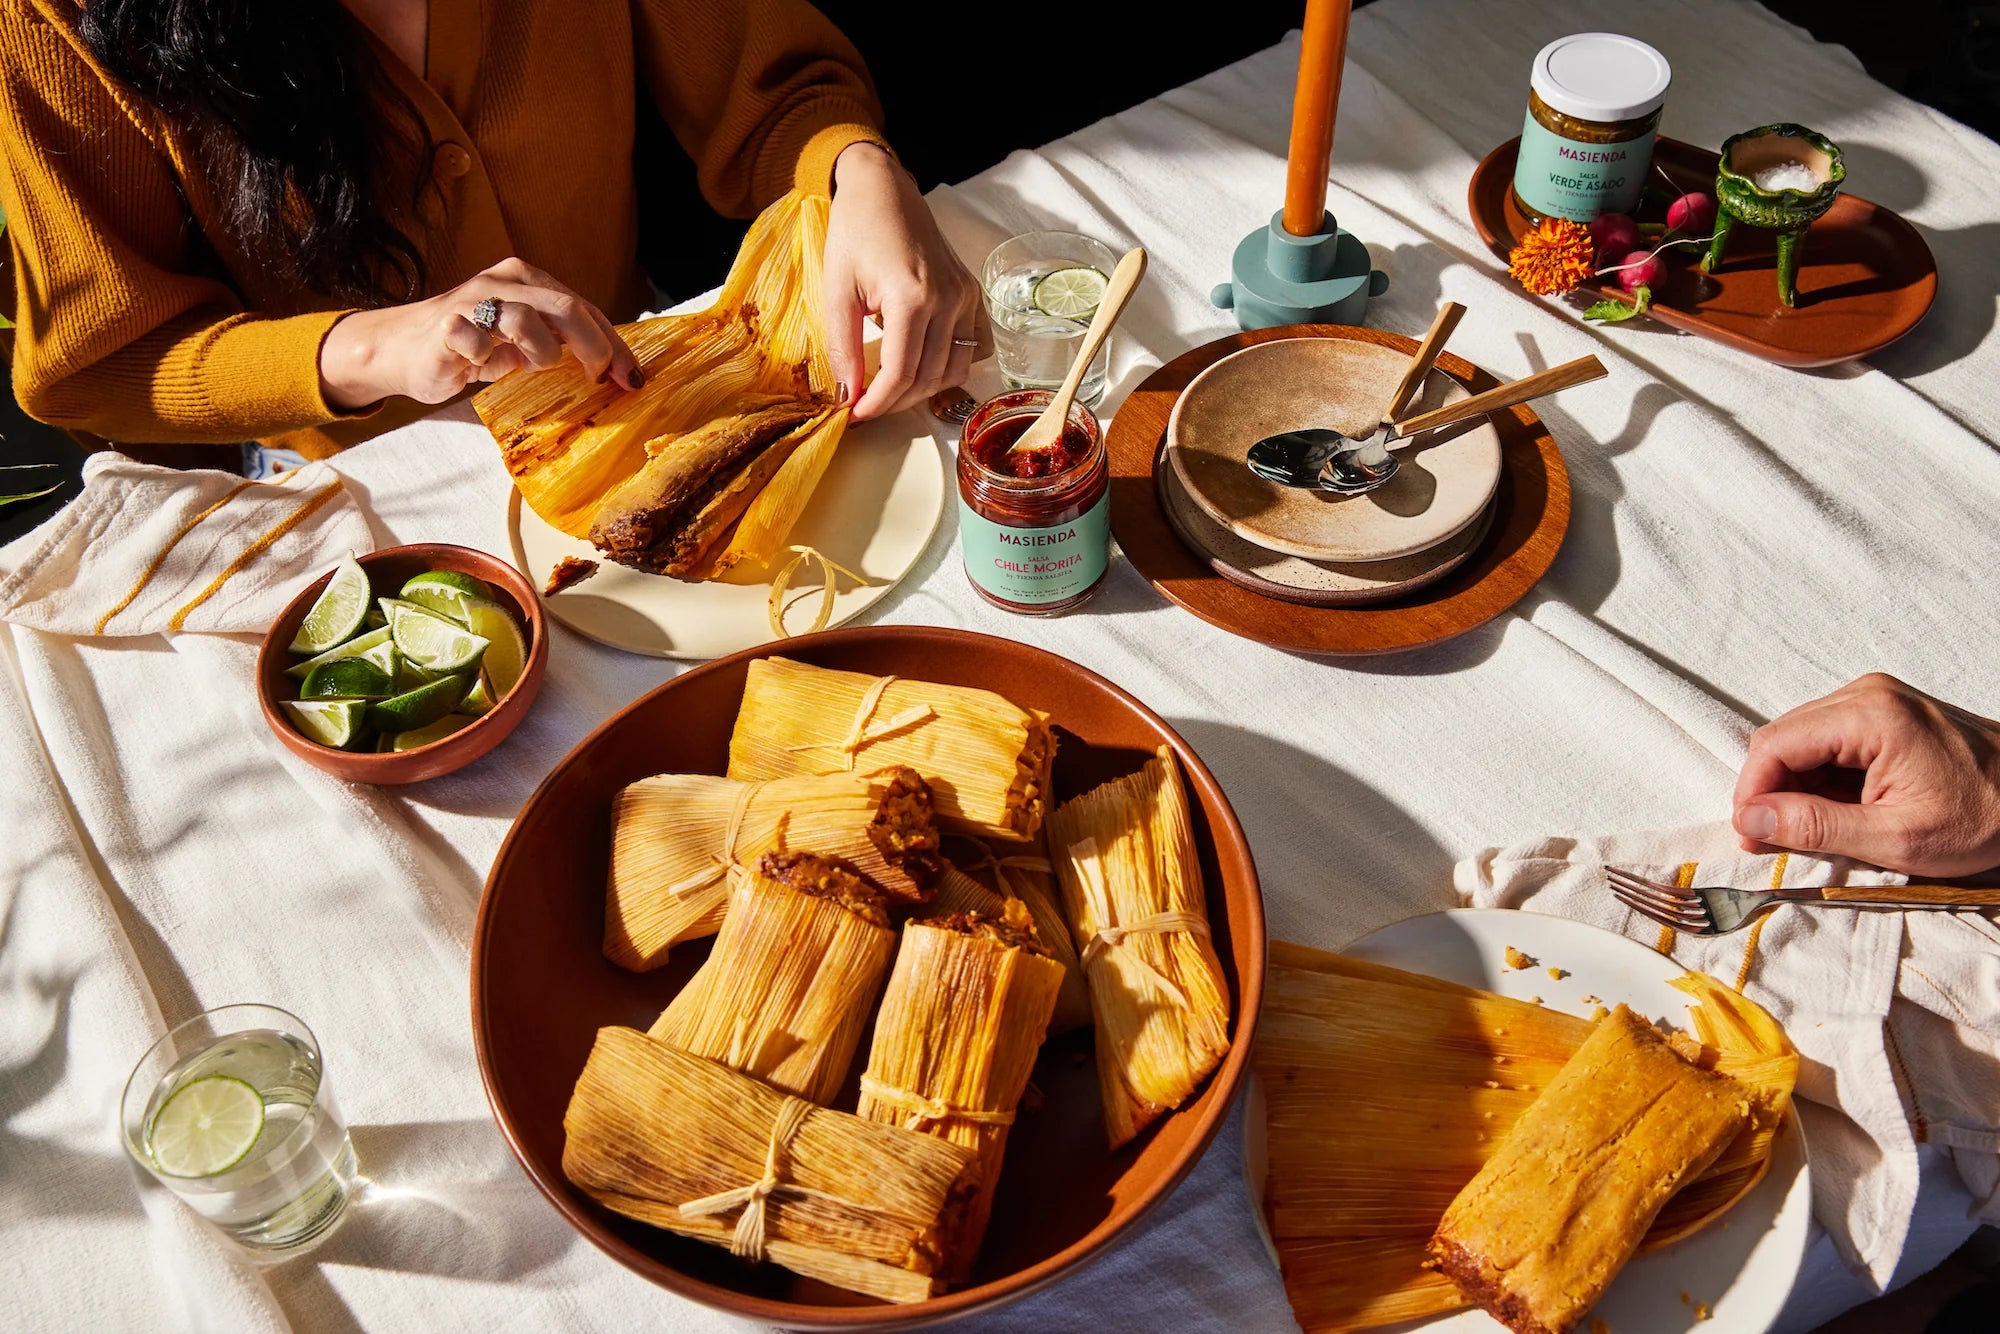 Masa Feature : Corn-tine tamales with Mira Evnine – Masienda